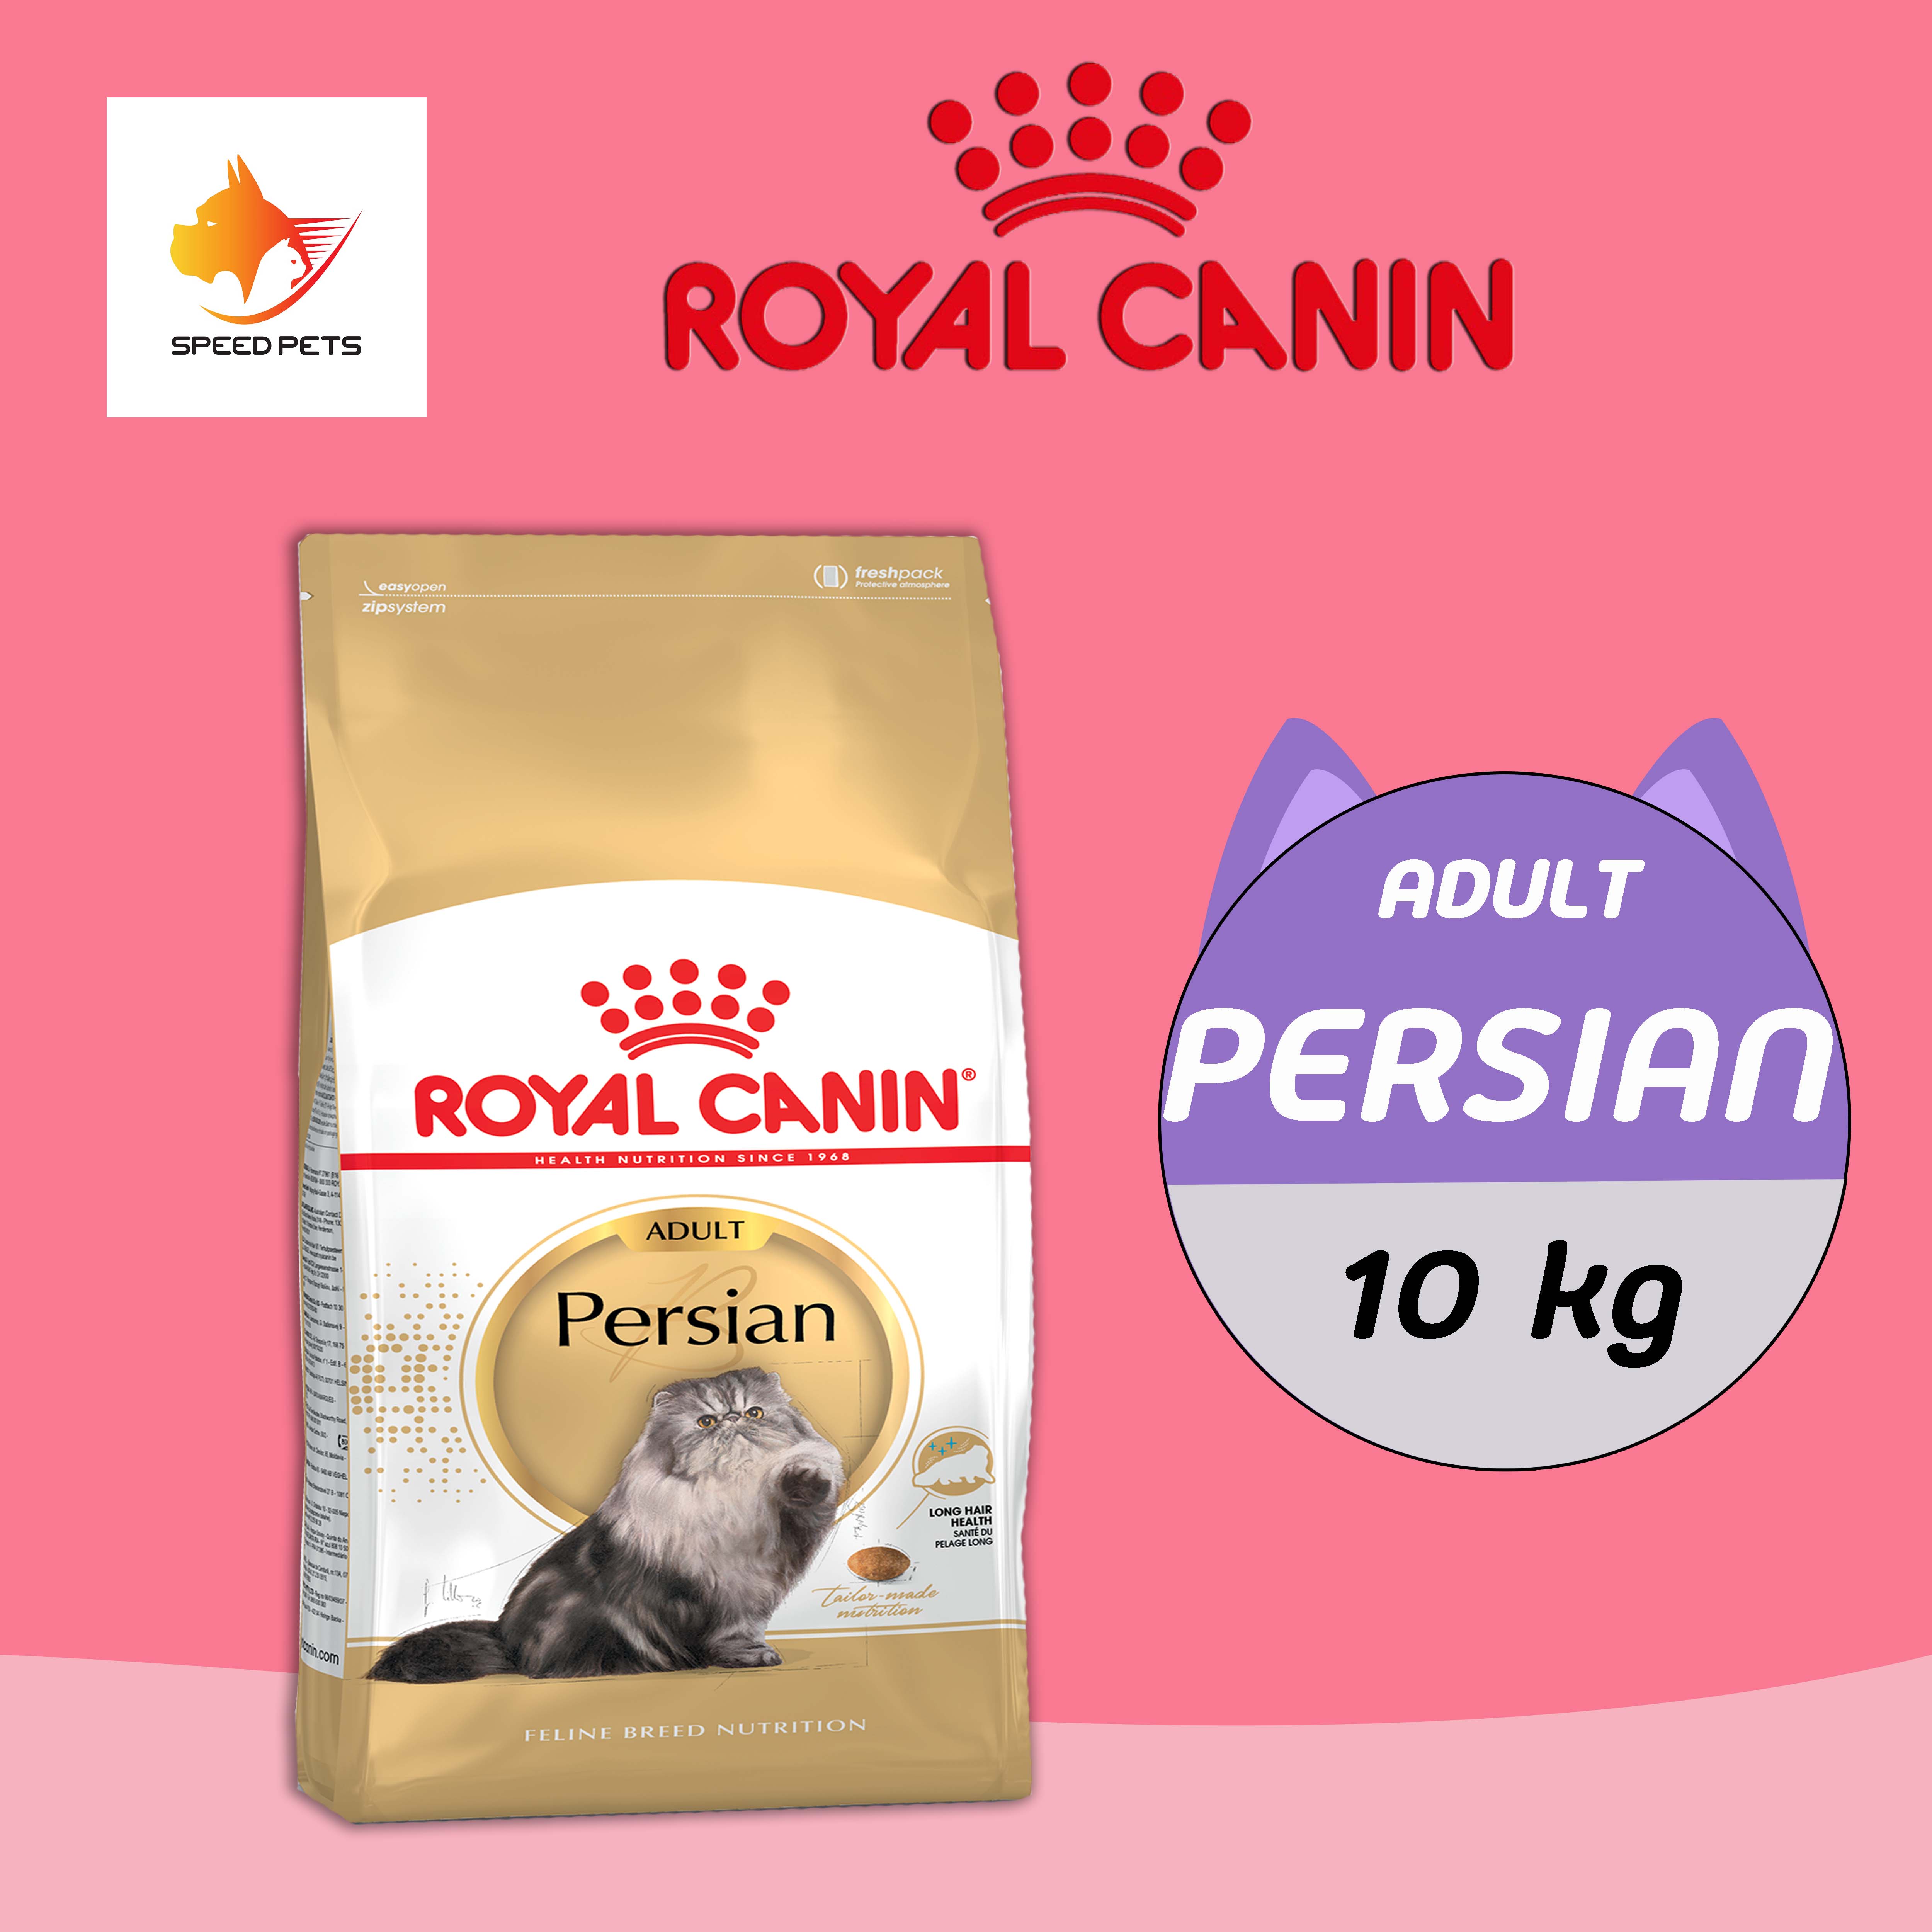 Royal Canin  Persian Adult 10kg โรยัล คานิน อาหารแมว โต เปอร์เซีย 10kg